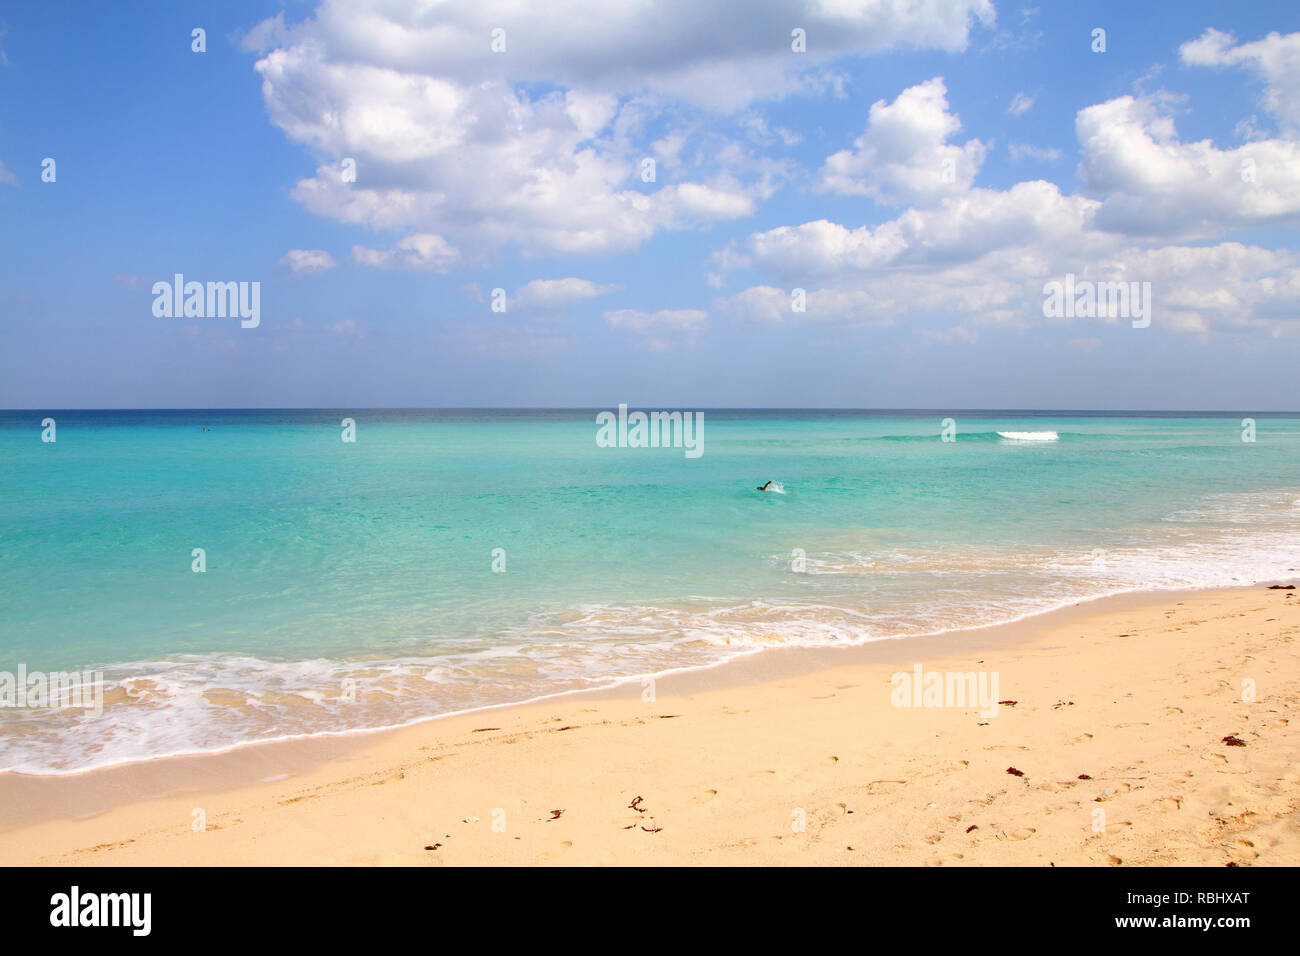 Kuba - Karibik Strand Playa Megano in Playas del Este Teil der Provinz Havanna. Sandige Küste. Stockfoto